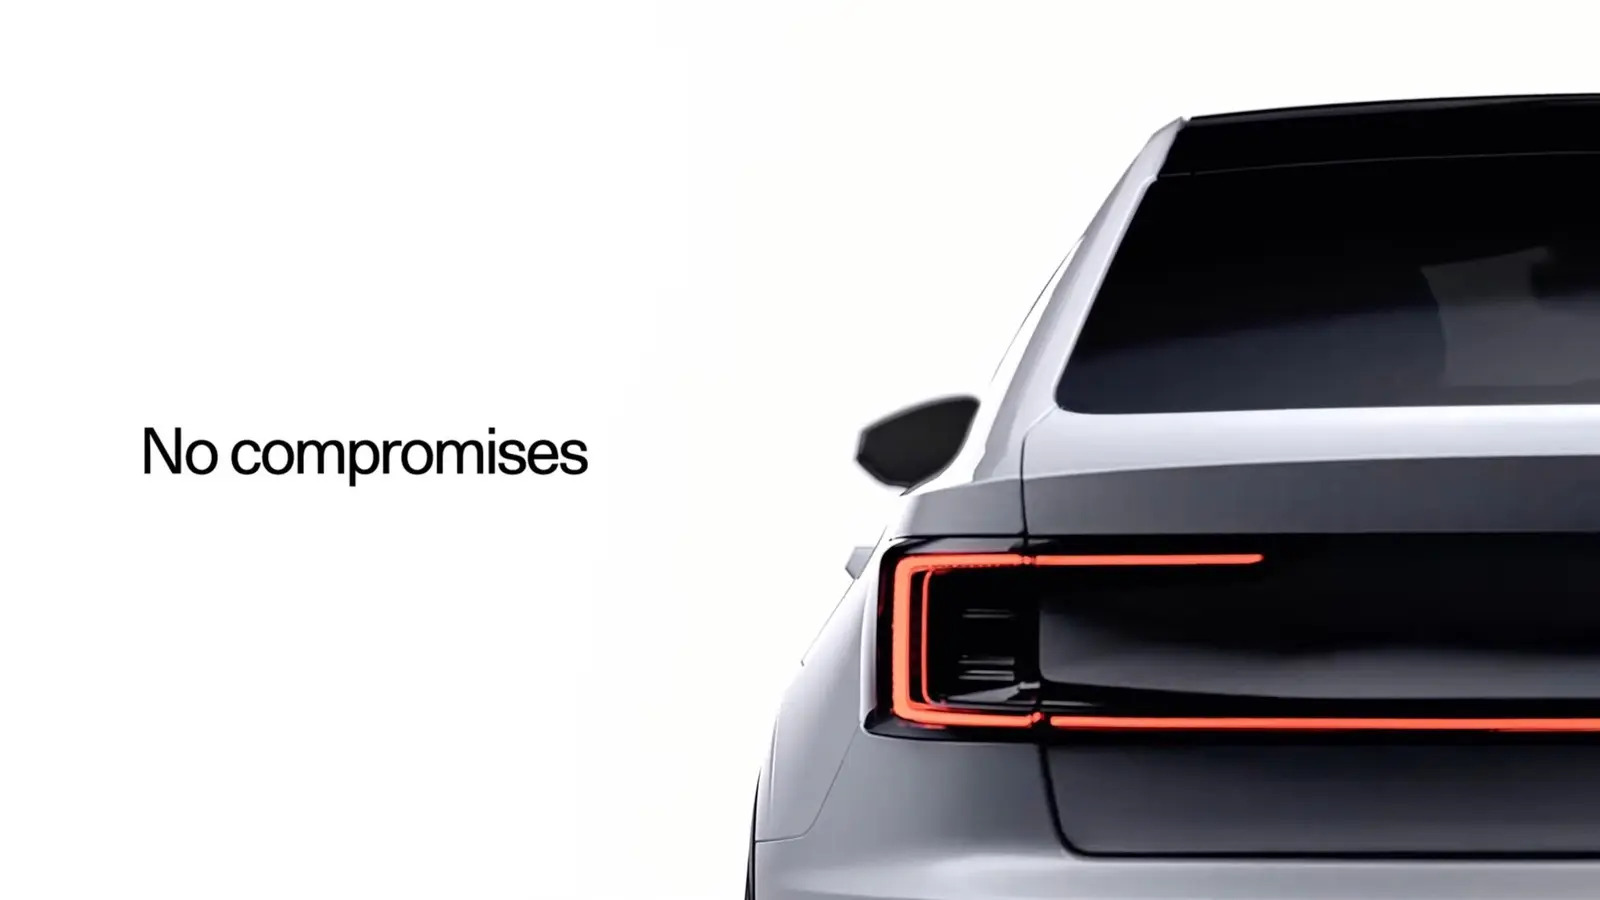 Polestar fires shots at Tesla and Volkswagen, promises ‘no compromises’ in Super Bowl ad